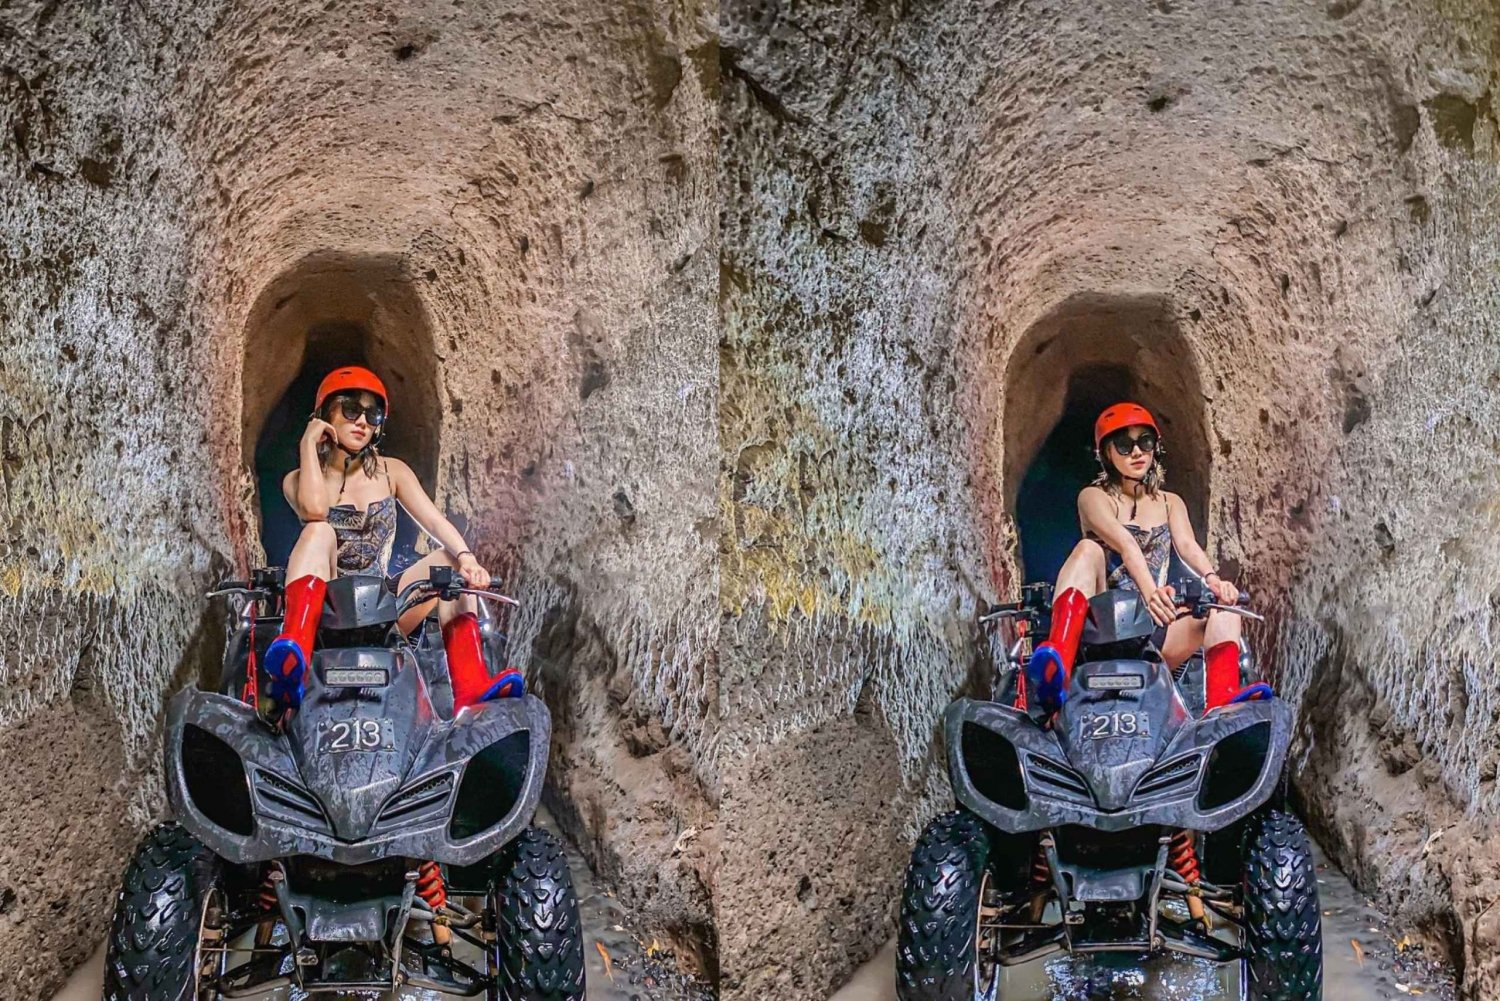 Bali: ATV Quad Bike Tunnels & Waterfalls Tour